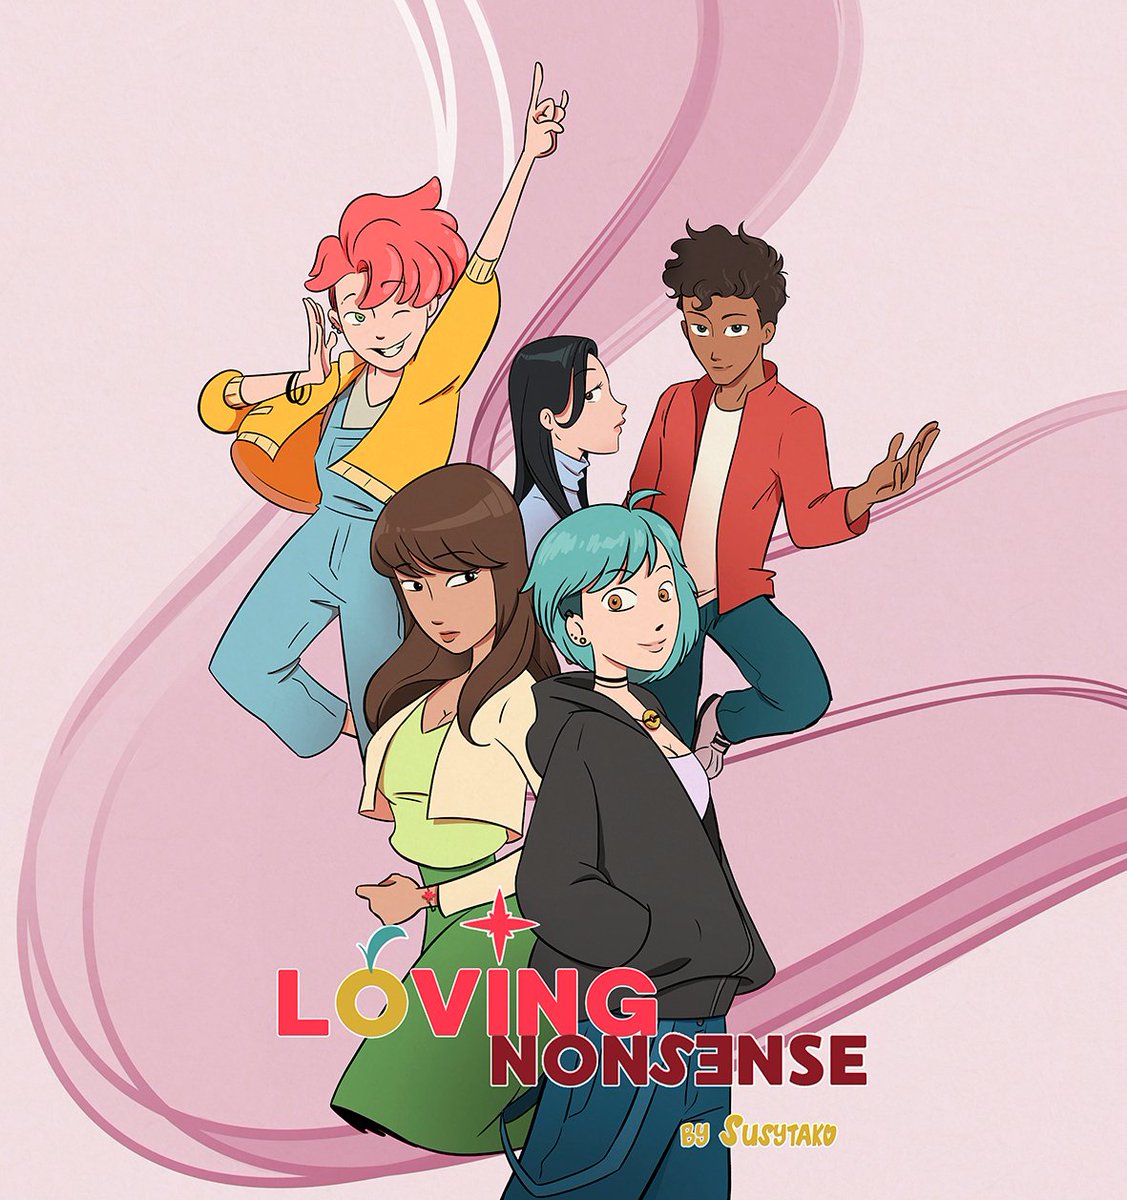 Loving Nonsense (GL) 3 first episodes already on Webtoon!!
webtoons.com/en/challenge/l…

#girlslove #loveislove #ValentinesDay #webtoon #WebtoonCanvas #webtoons #webtoonseries #webcomic #webcomics #comic #yurianime #yurimanga #drawing #Drawingromance #LGTBQ #art #digitaldrawing